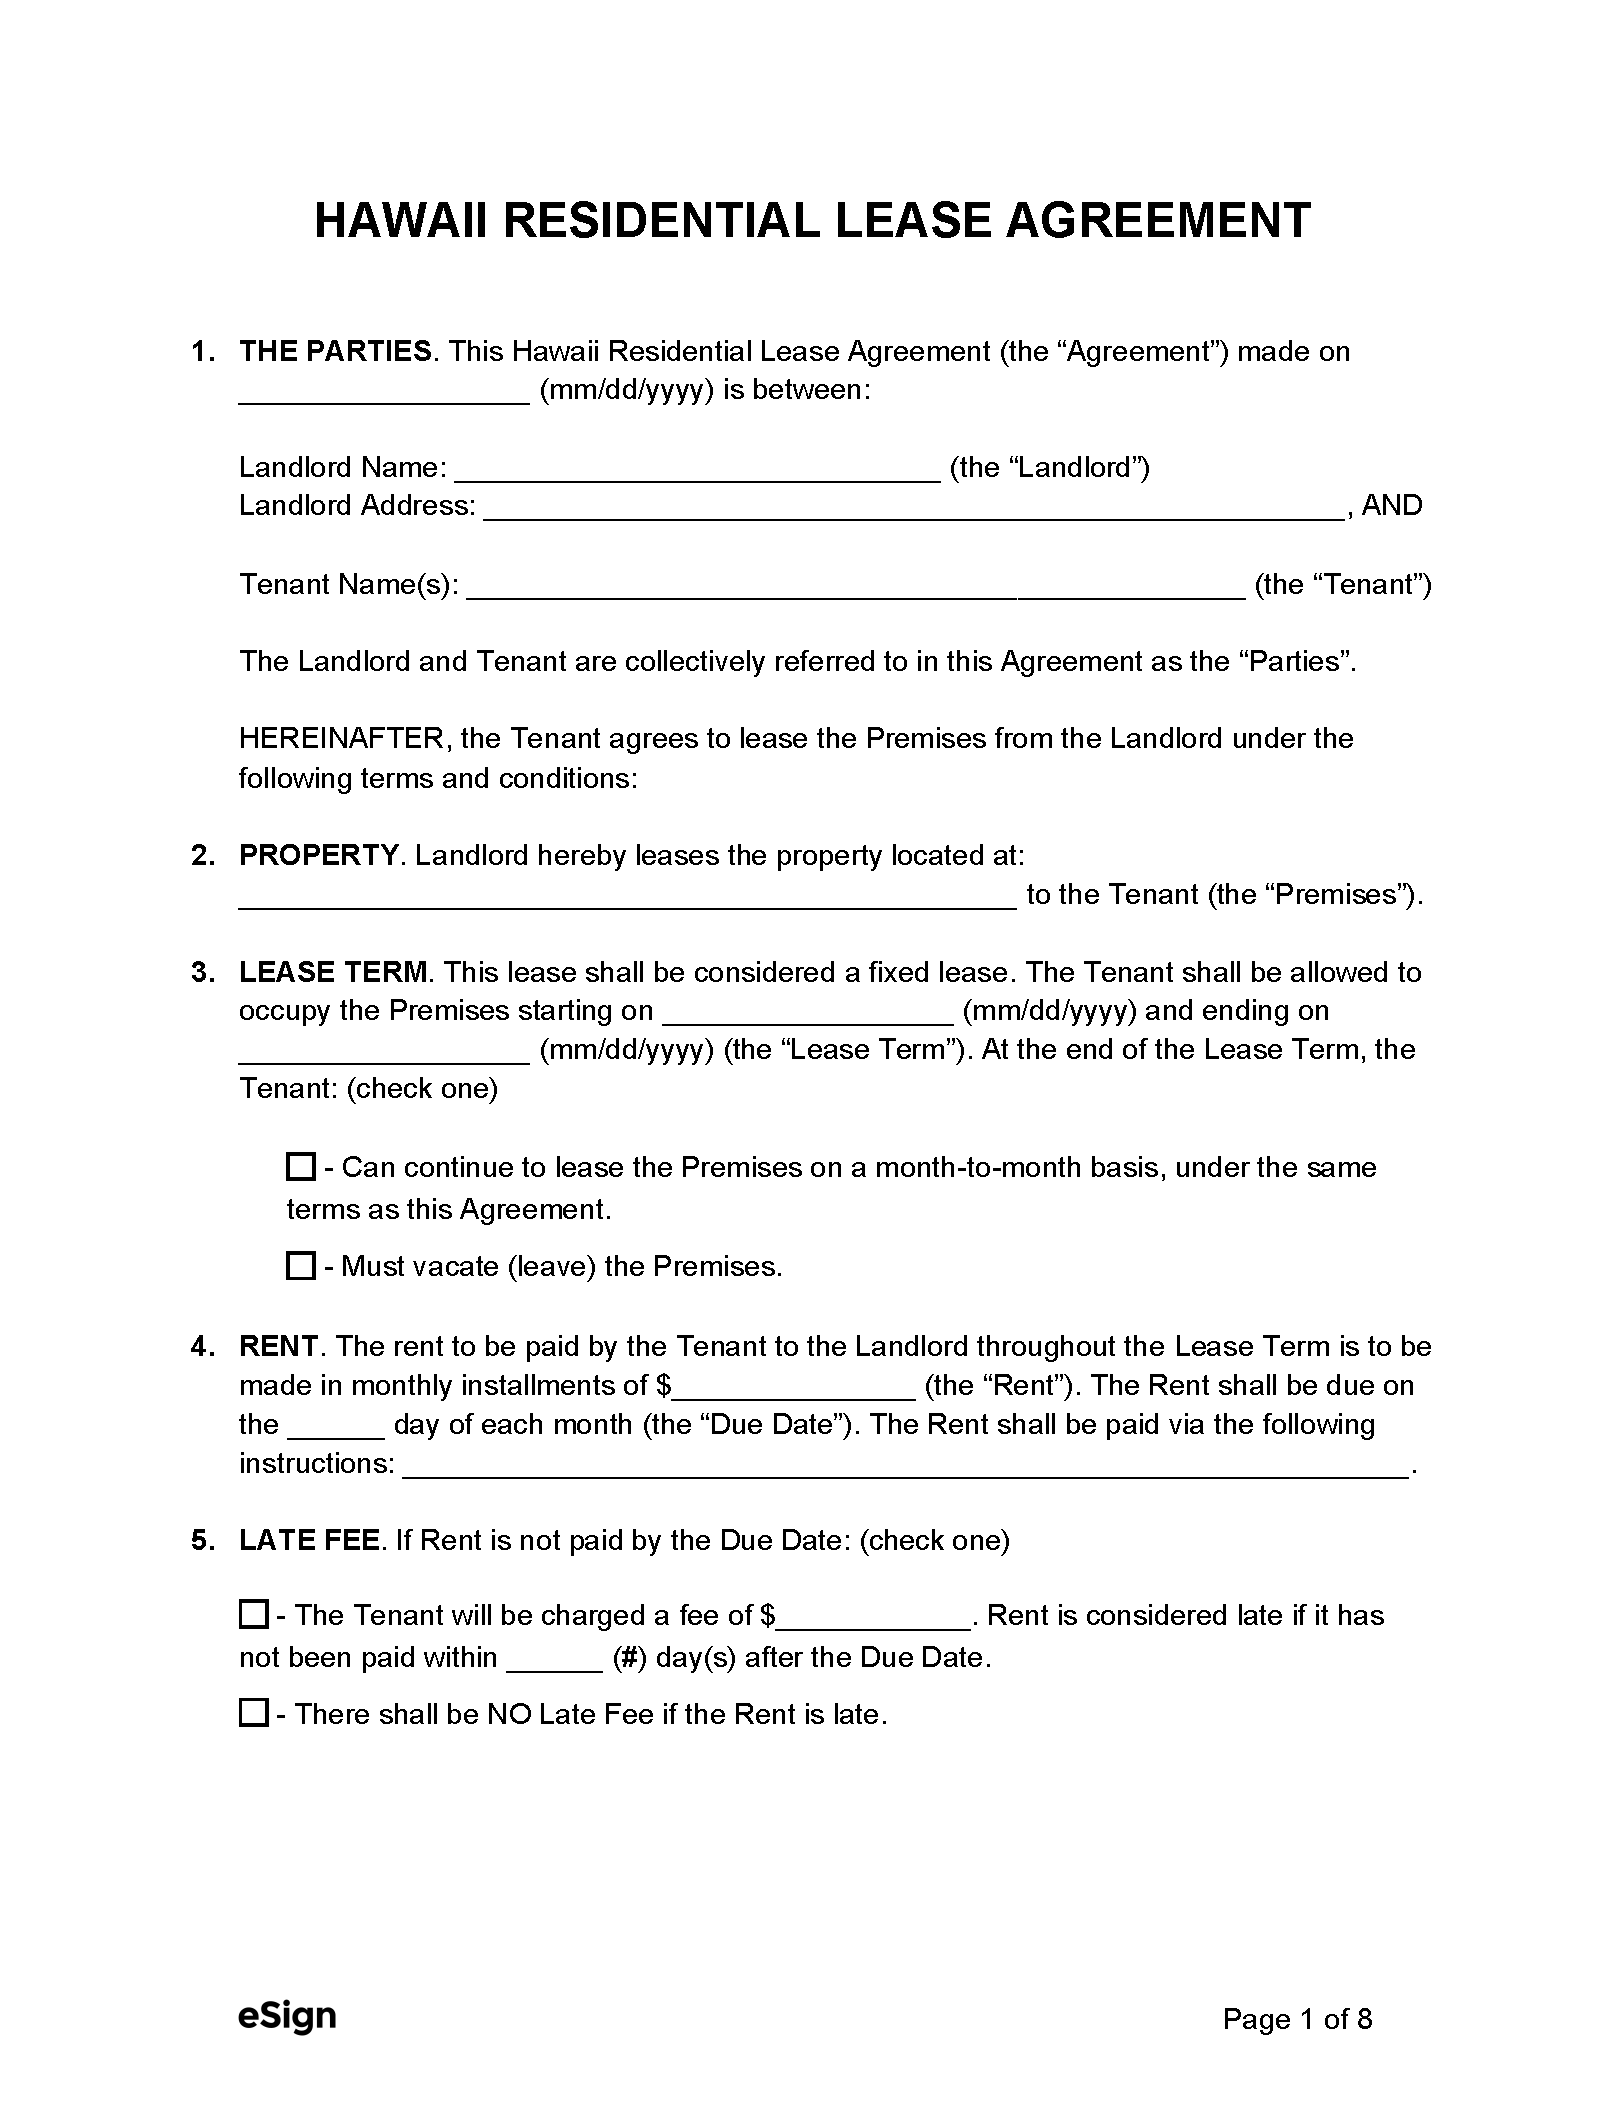 free-hawaii-standard-residential-lease-agreement-pdf-word